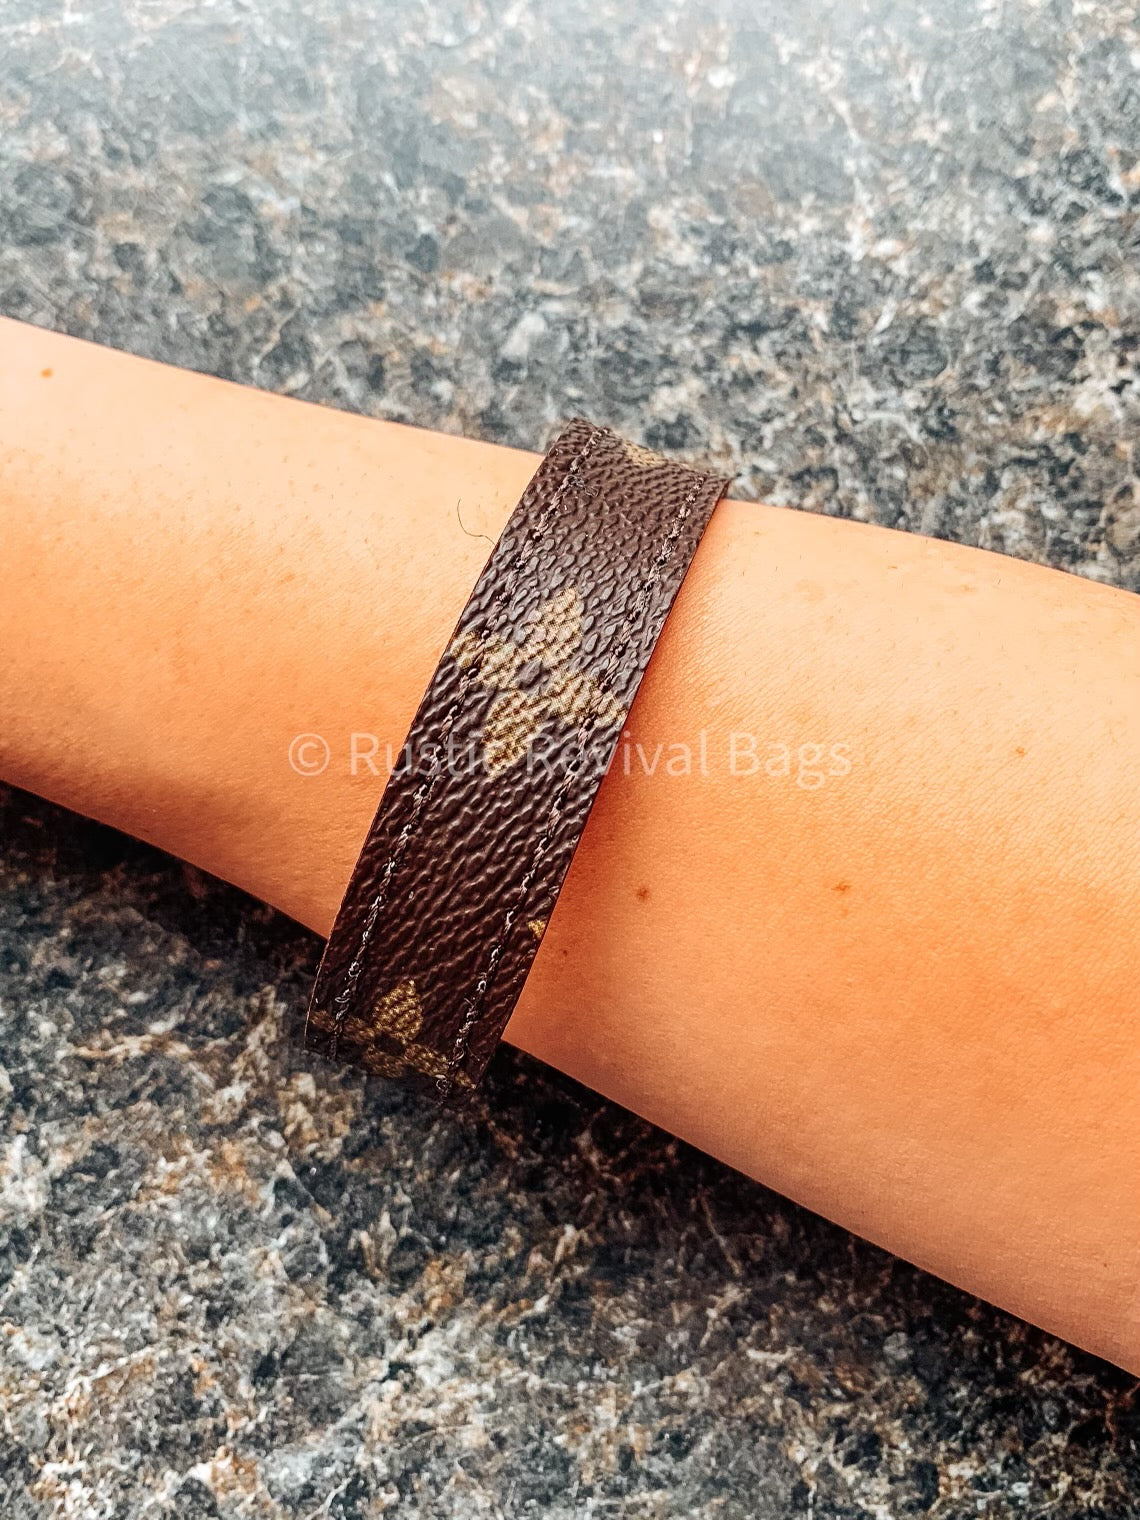 Cuff Bracelet – Rustic Revival Bags